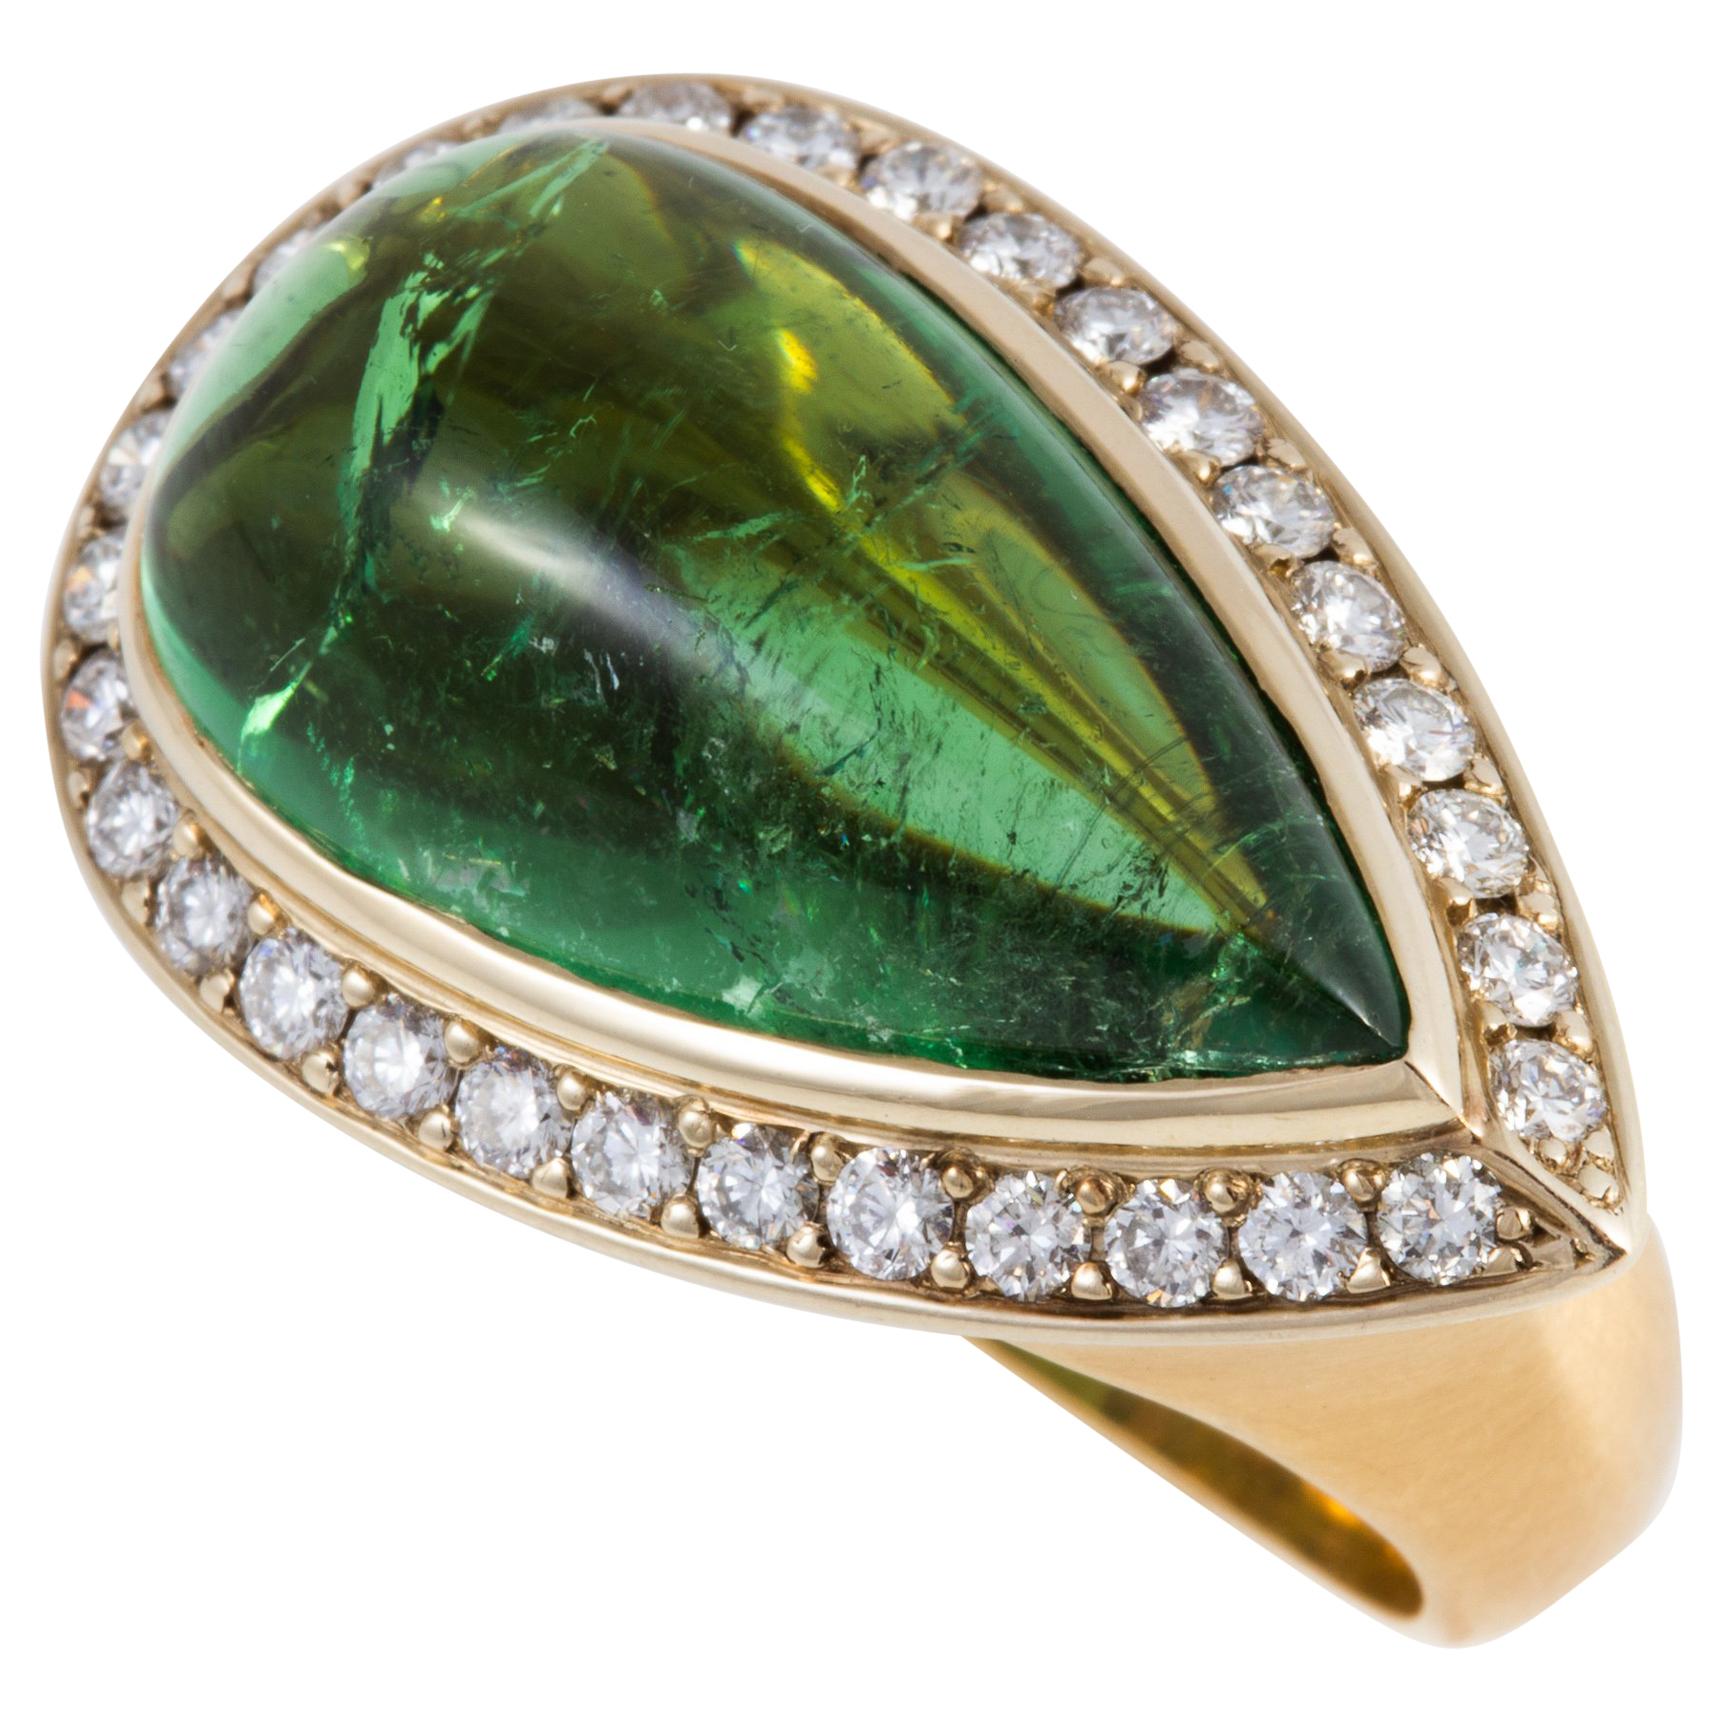 Exquisite 12.4 carat Green Tourmaline Cabochon Ring set in 18 karat Gold For Sale